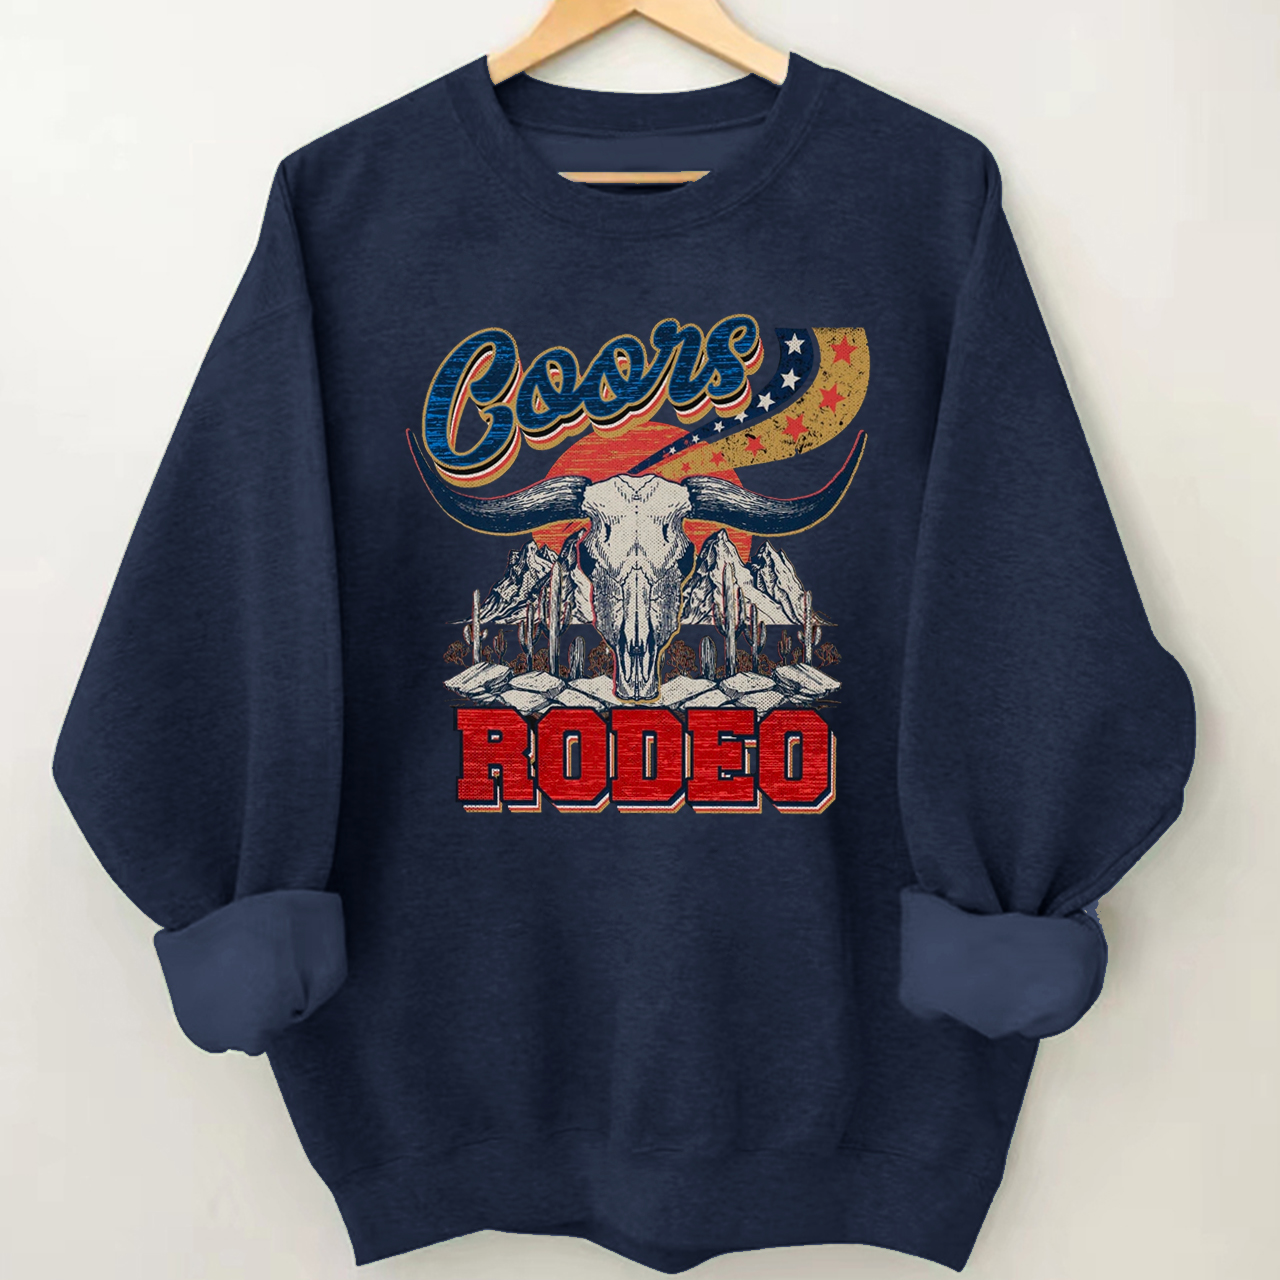 Coors rodeo retro inspired Sweatshirt